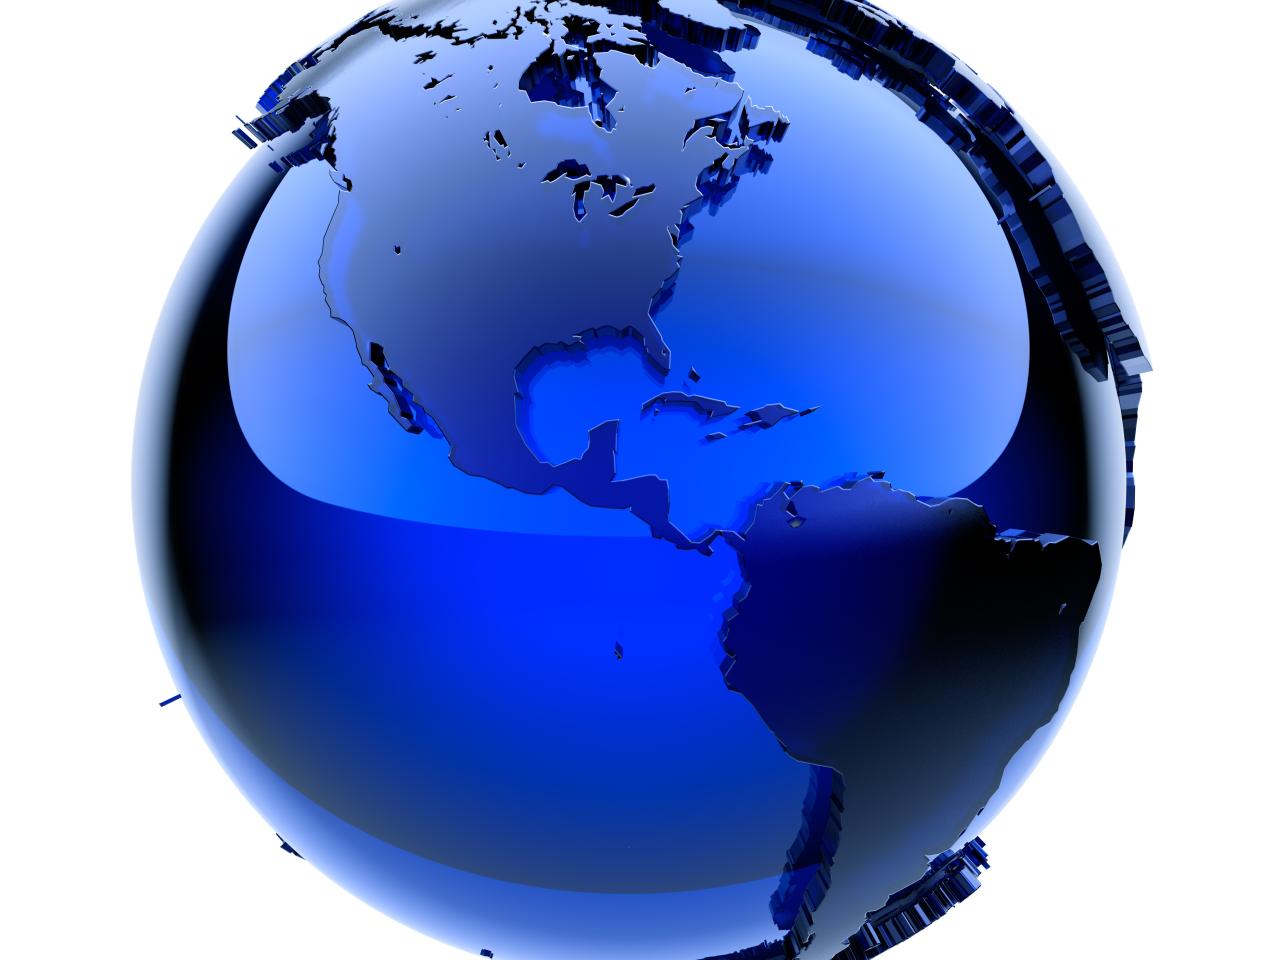 Blue Globe showing US